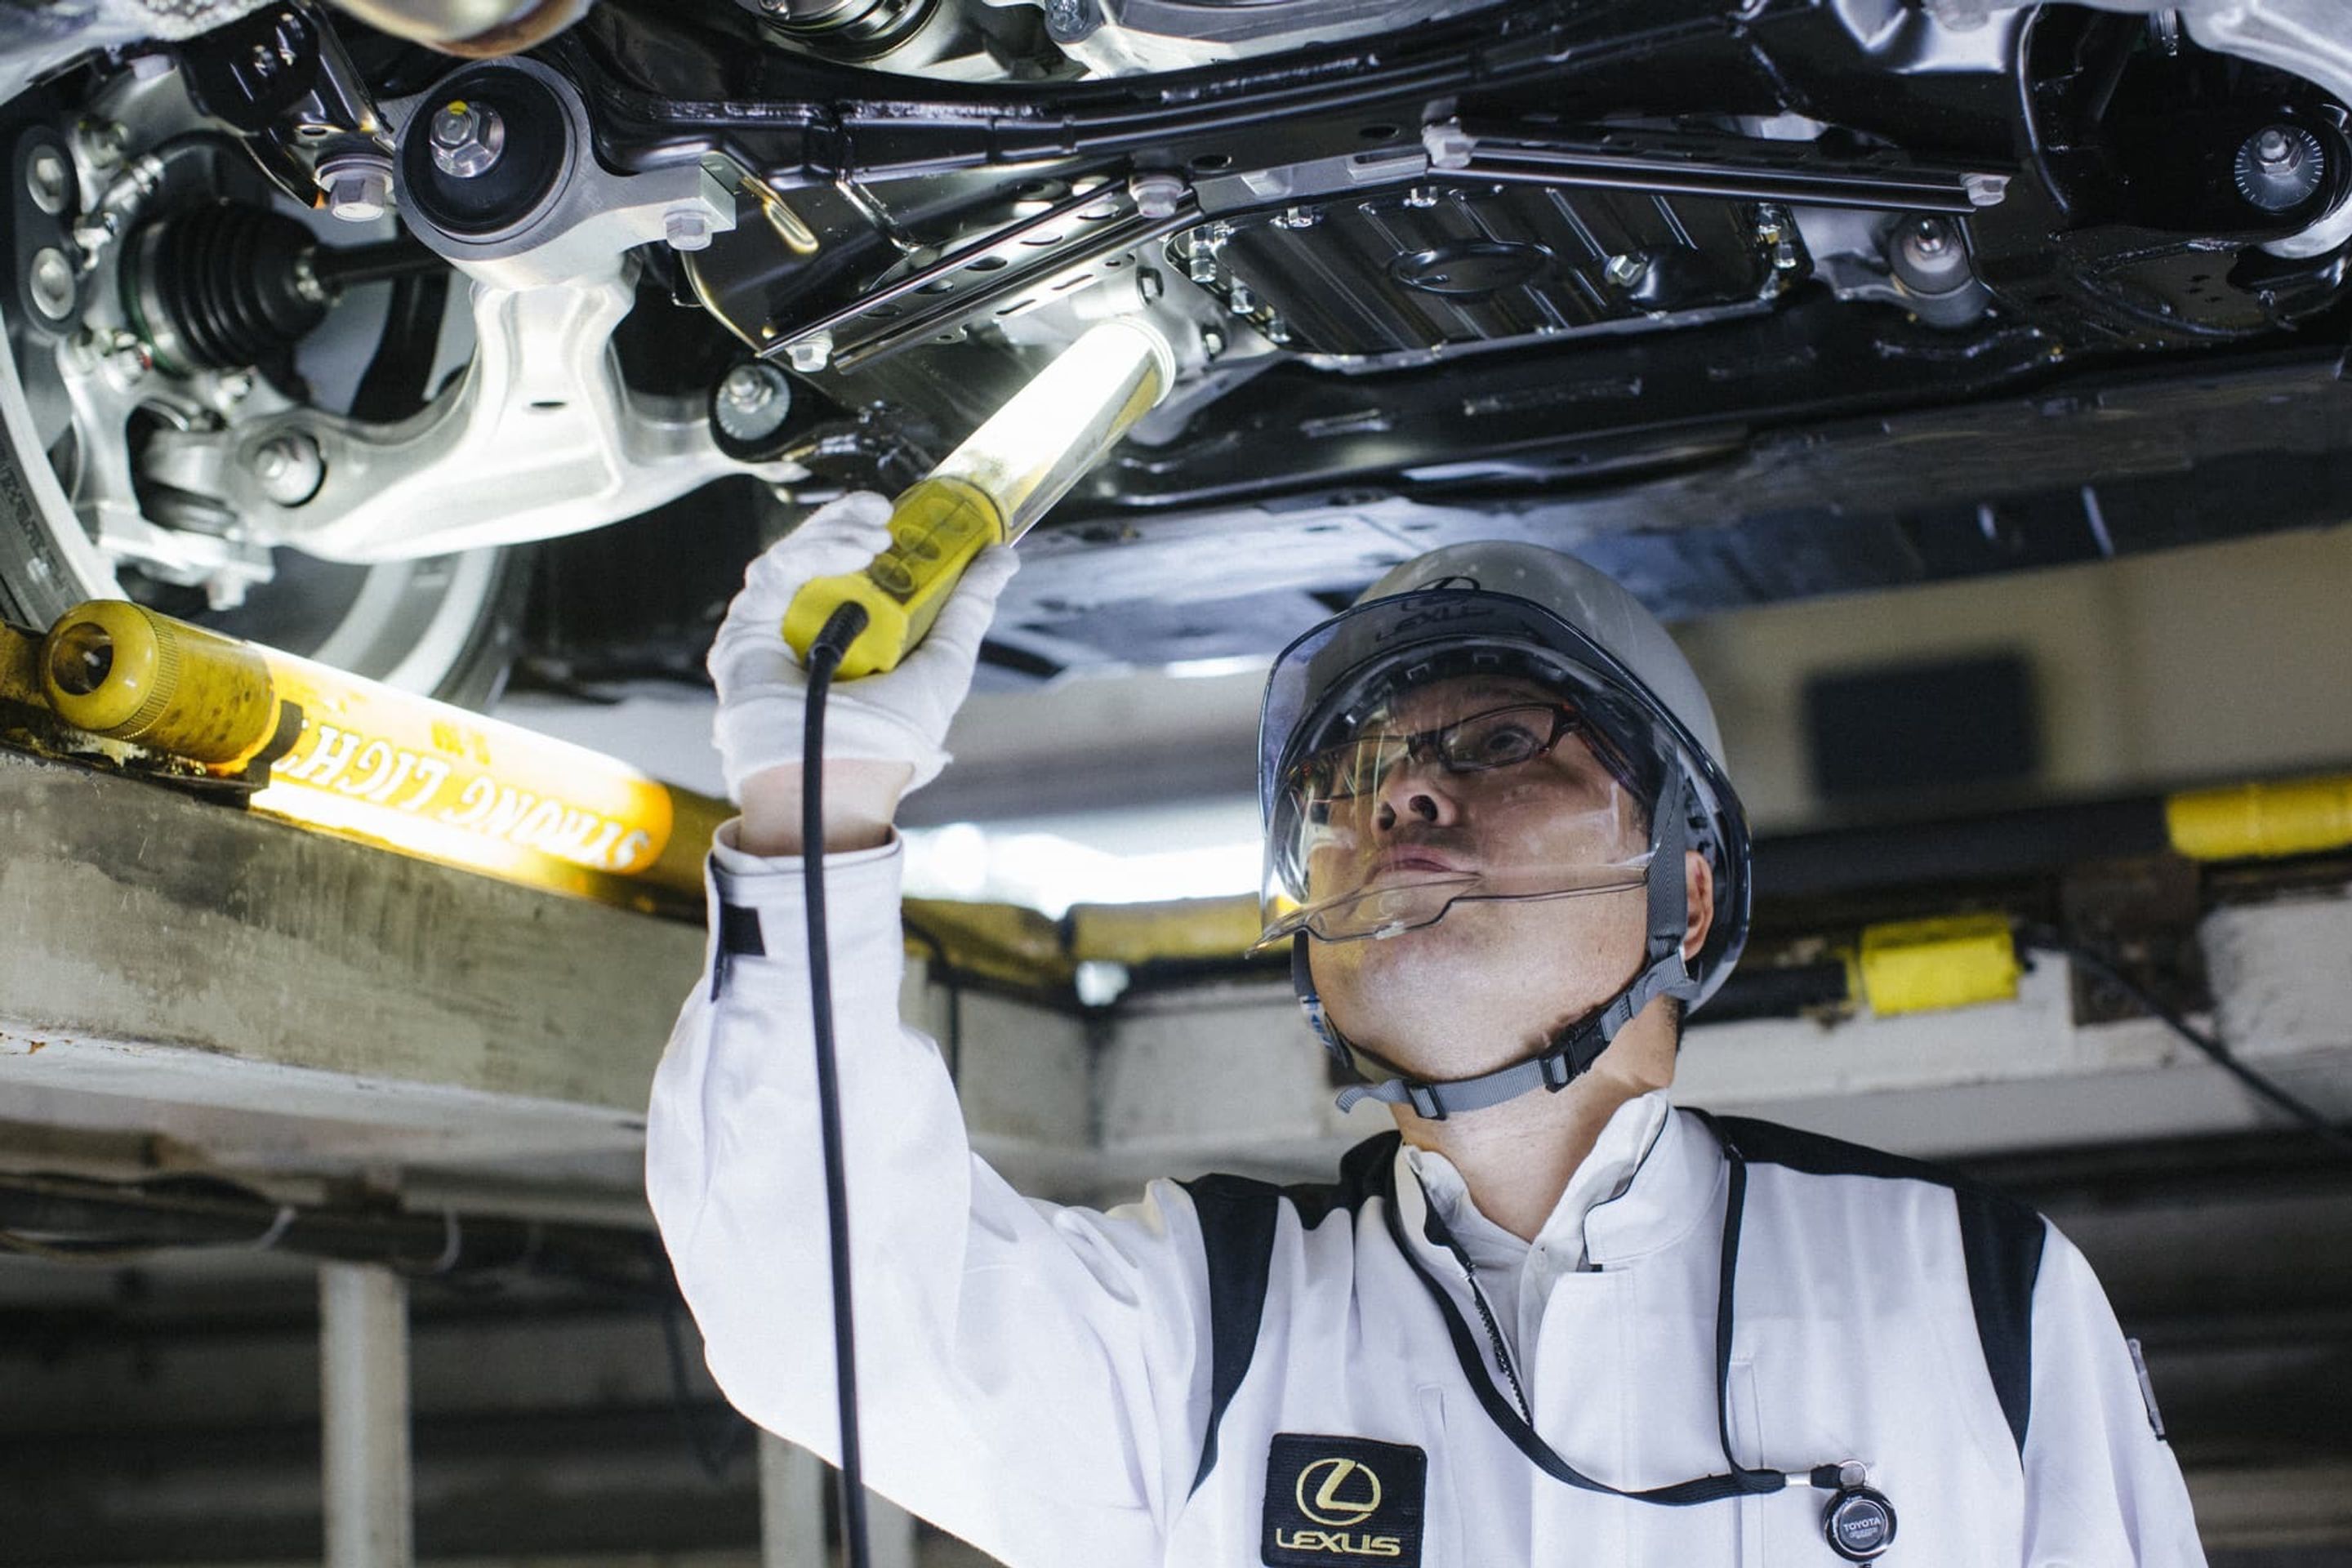 Mistři Takumi při kontrole vozů Lexus - 25 - Fotogalerie: Mistři Takumi v akci (10/15)